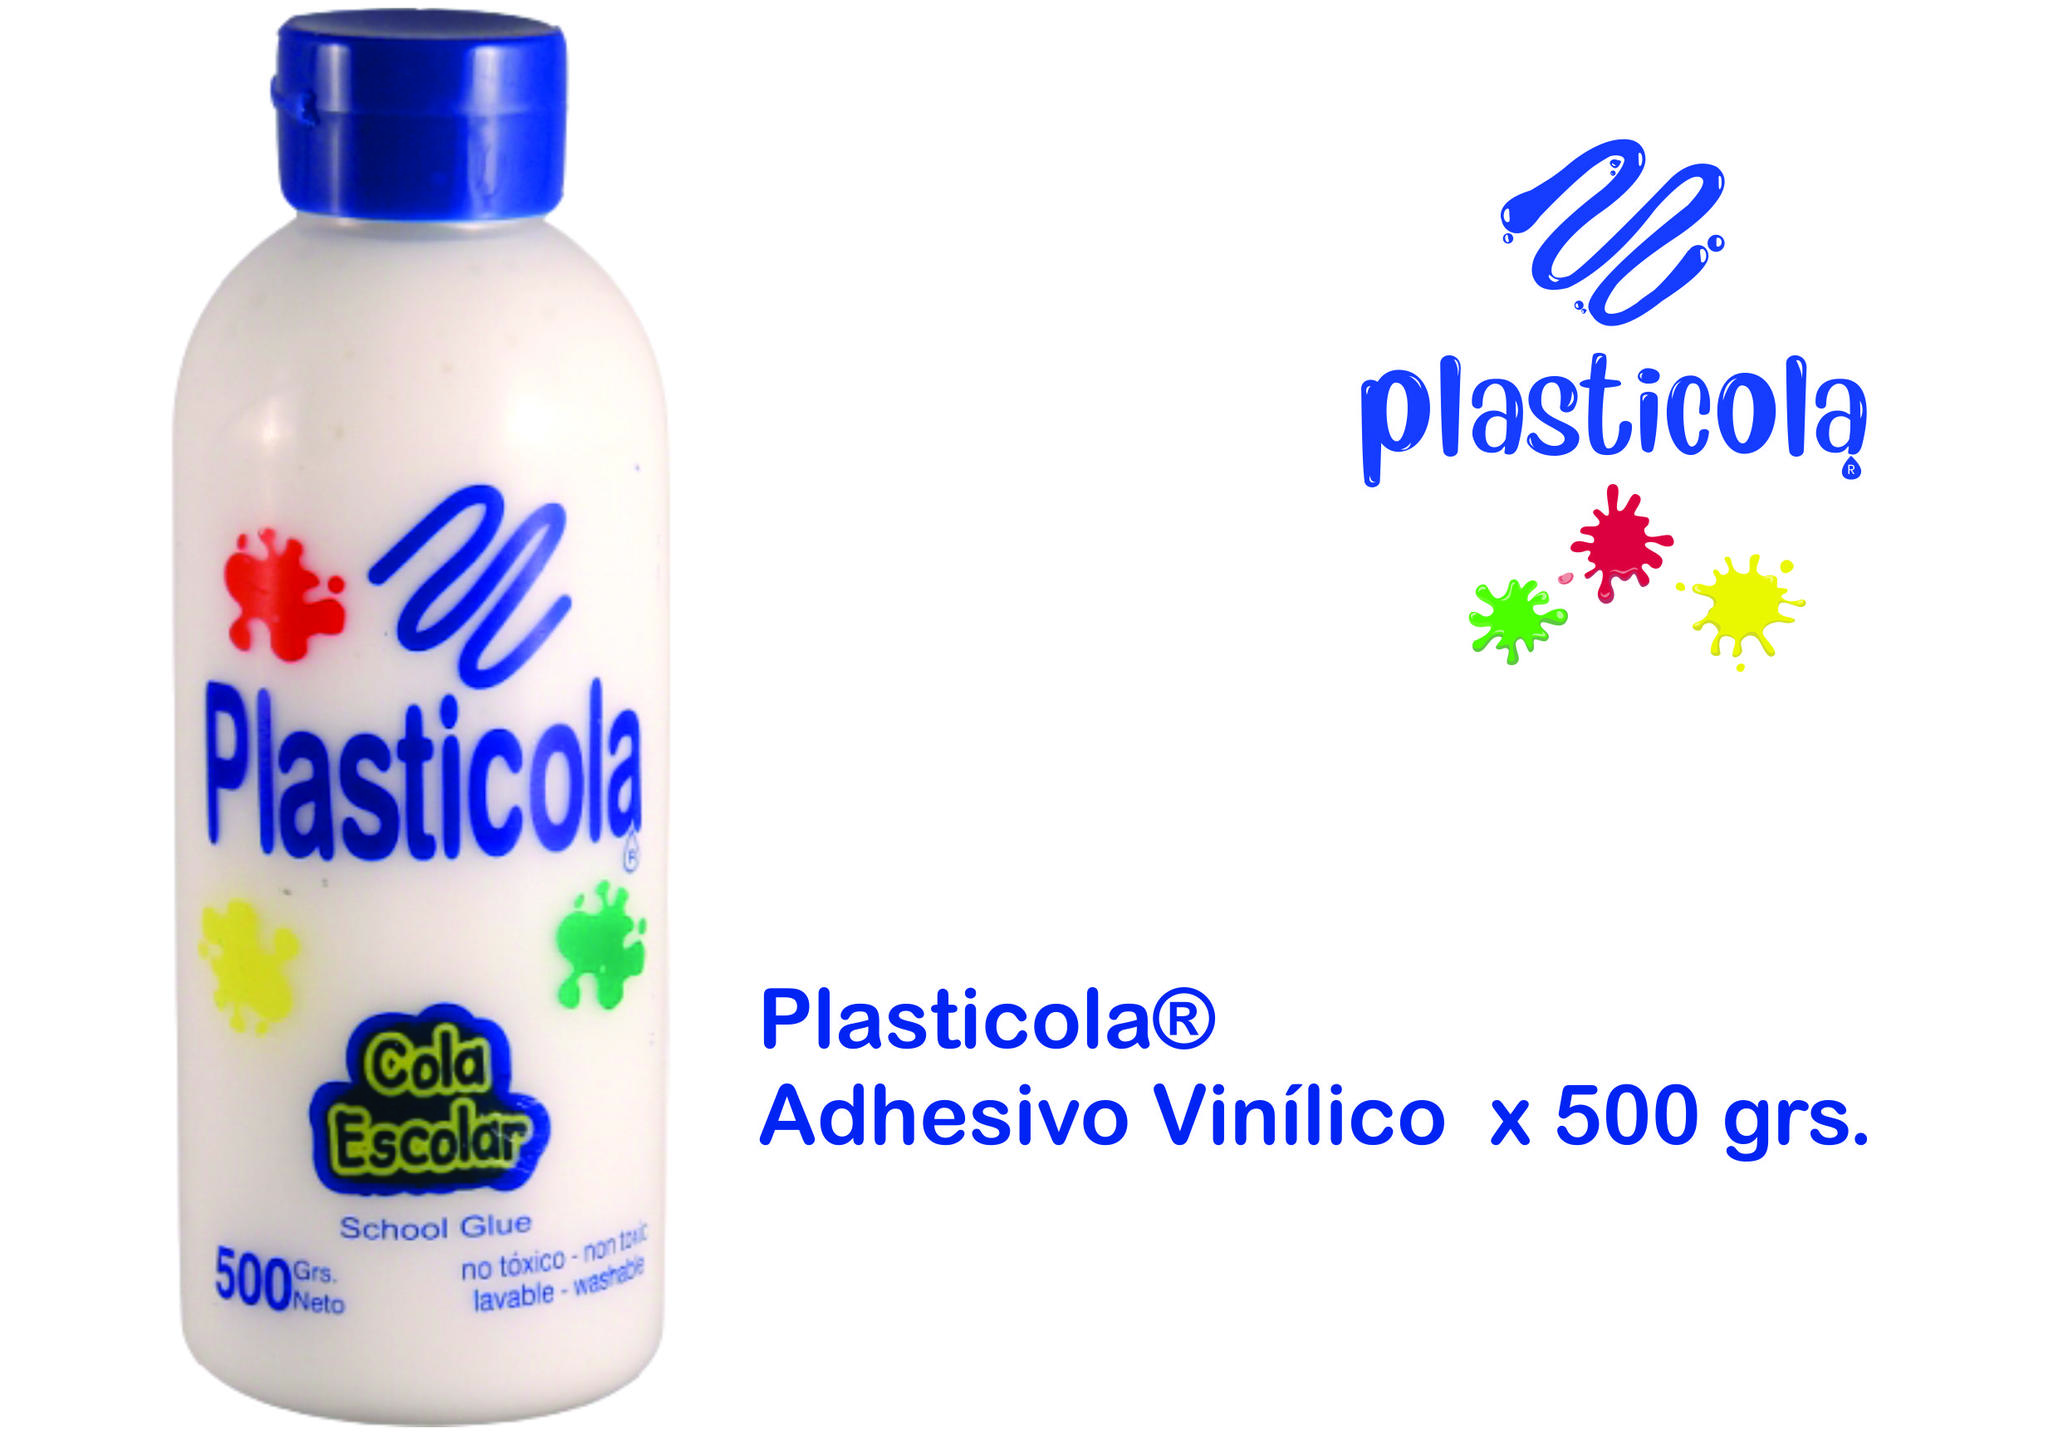 ADHESIVO VINILICO PLASTICOLA 486 GRS